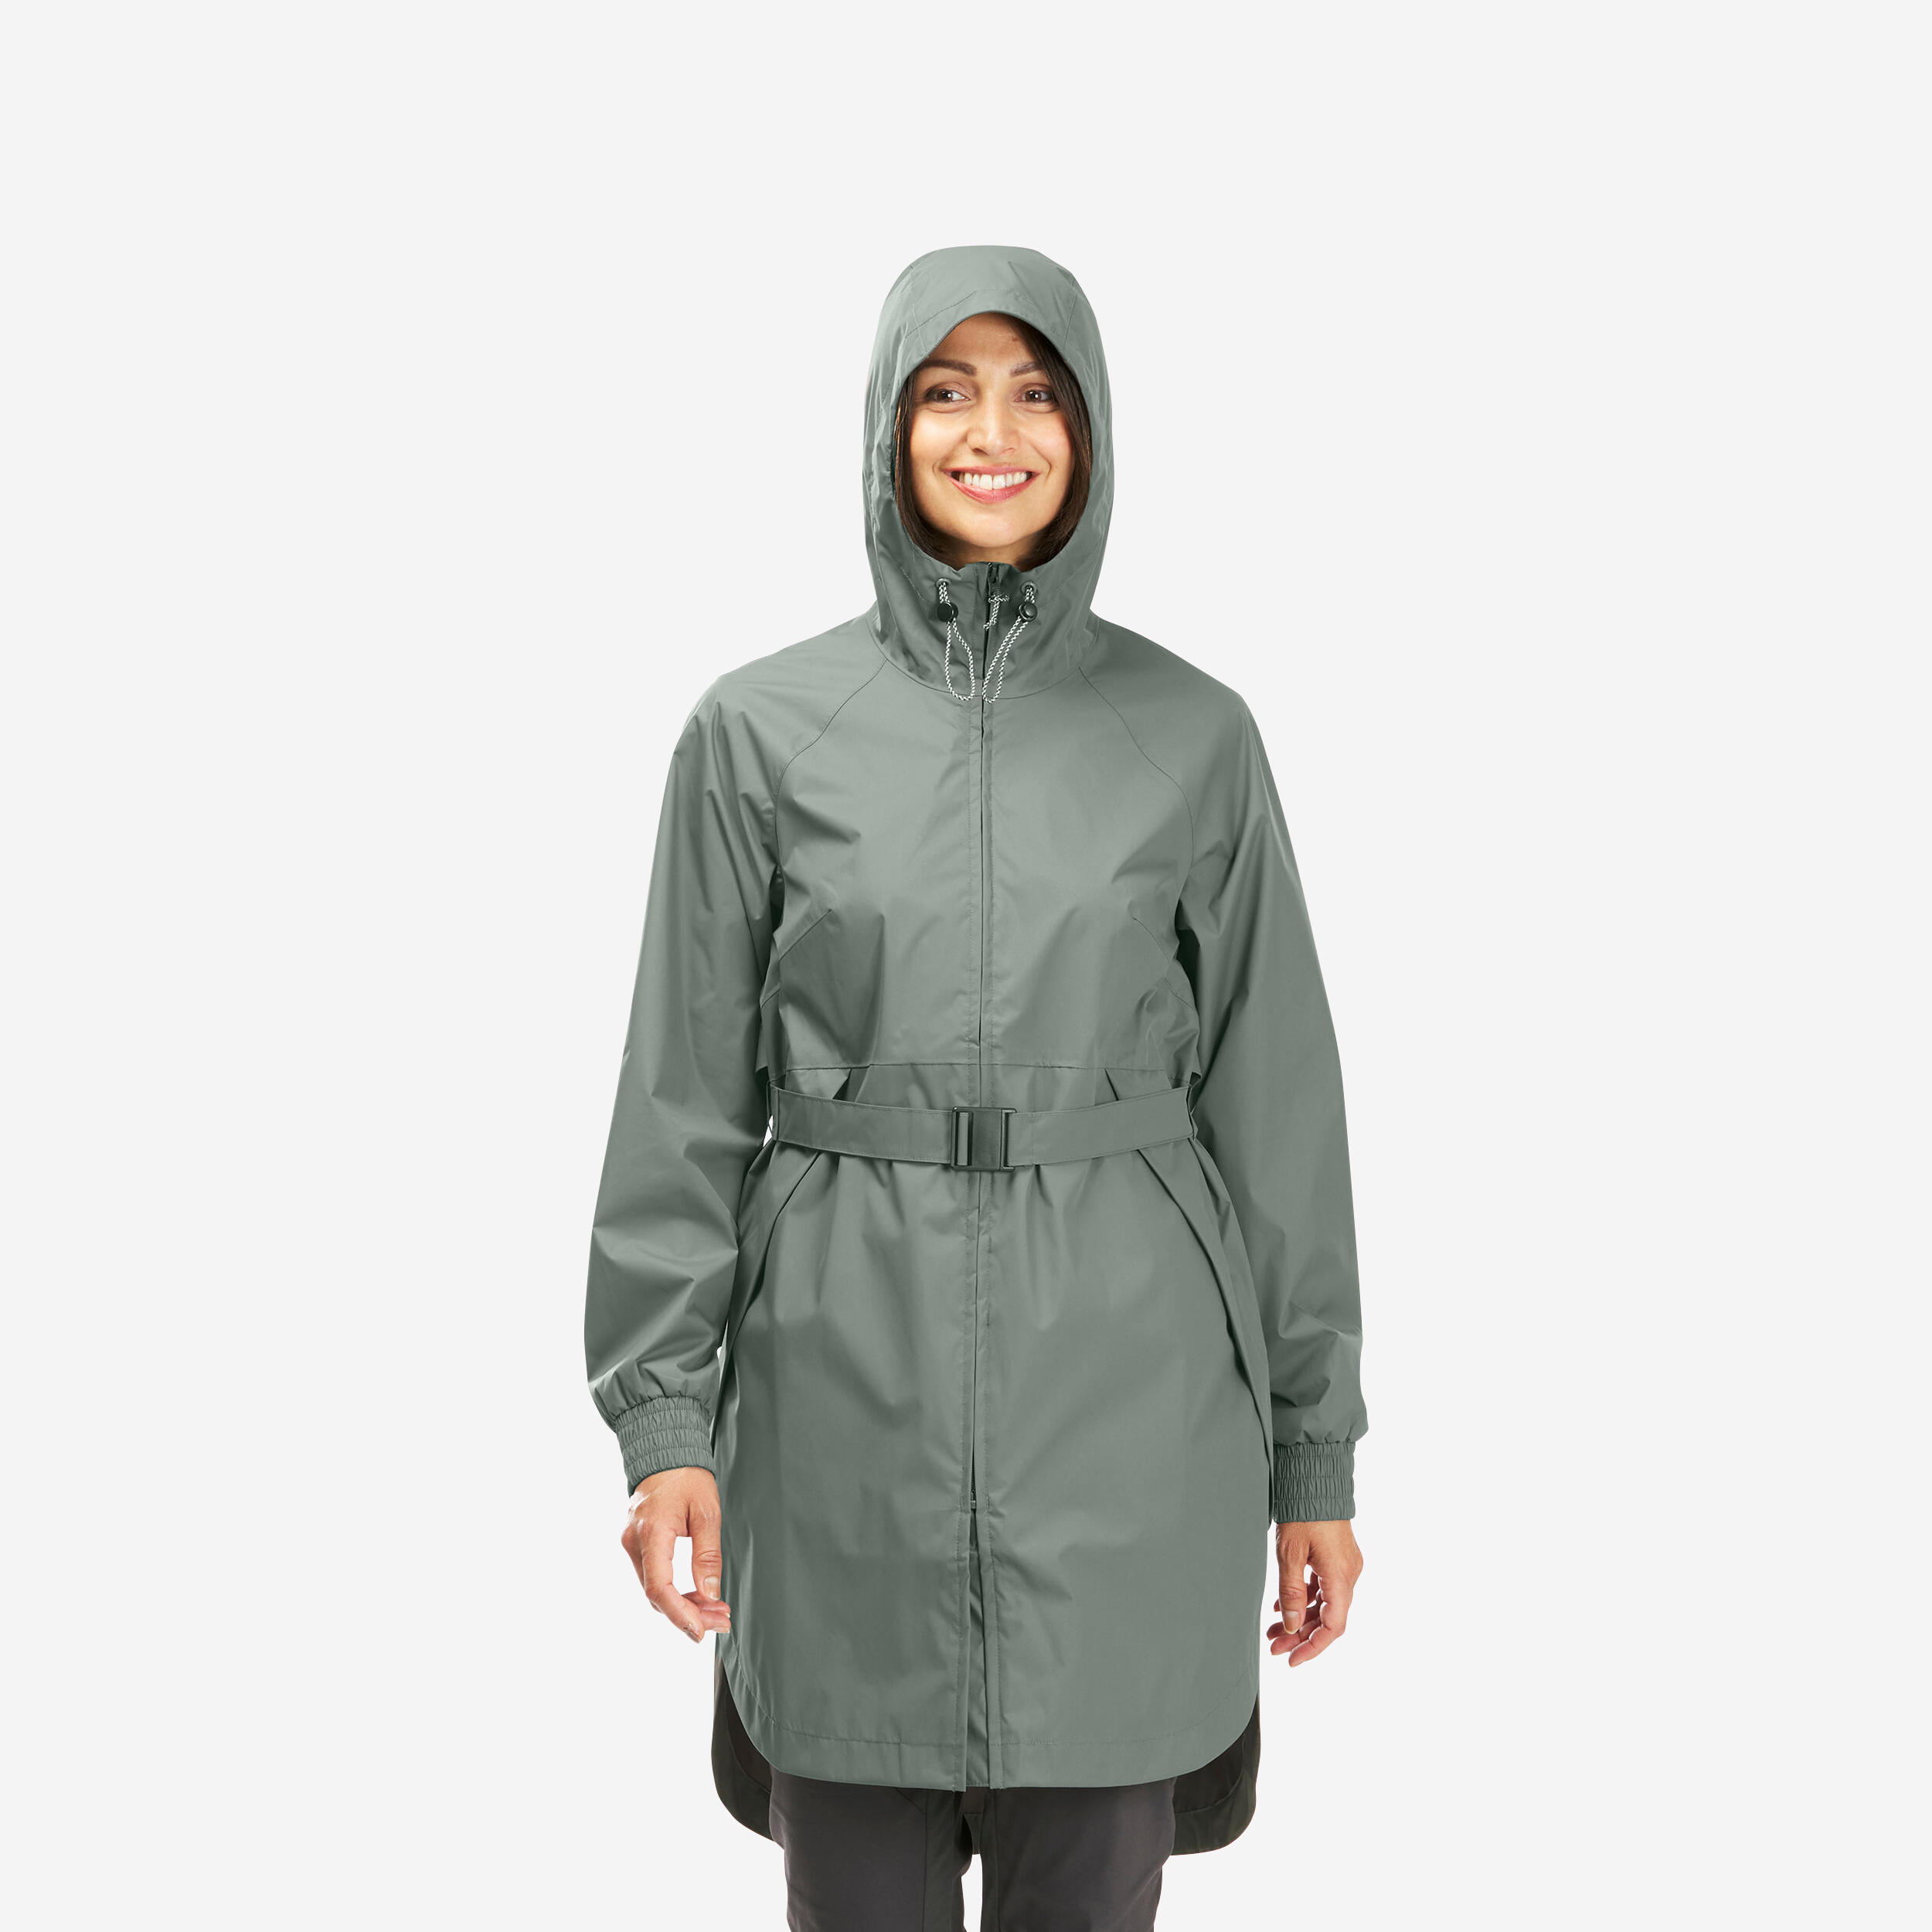 Image of Women’s Hiking Jacket - Raincut Khaki